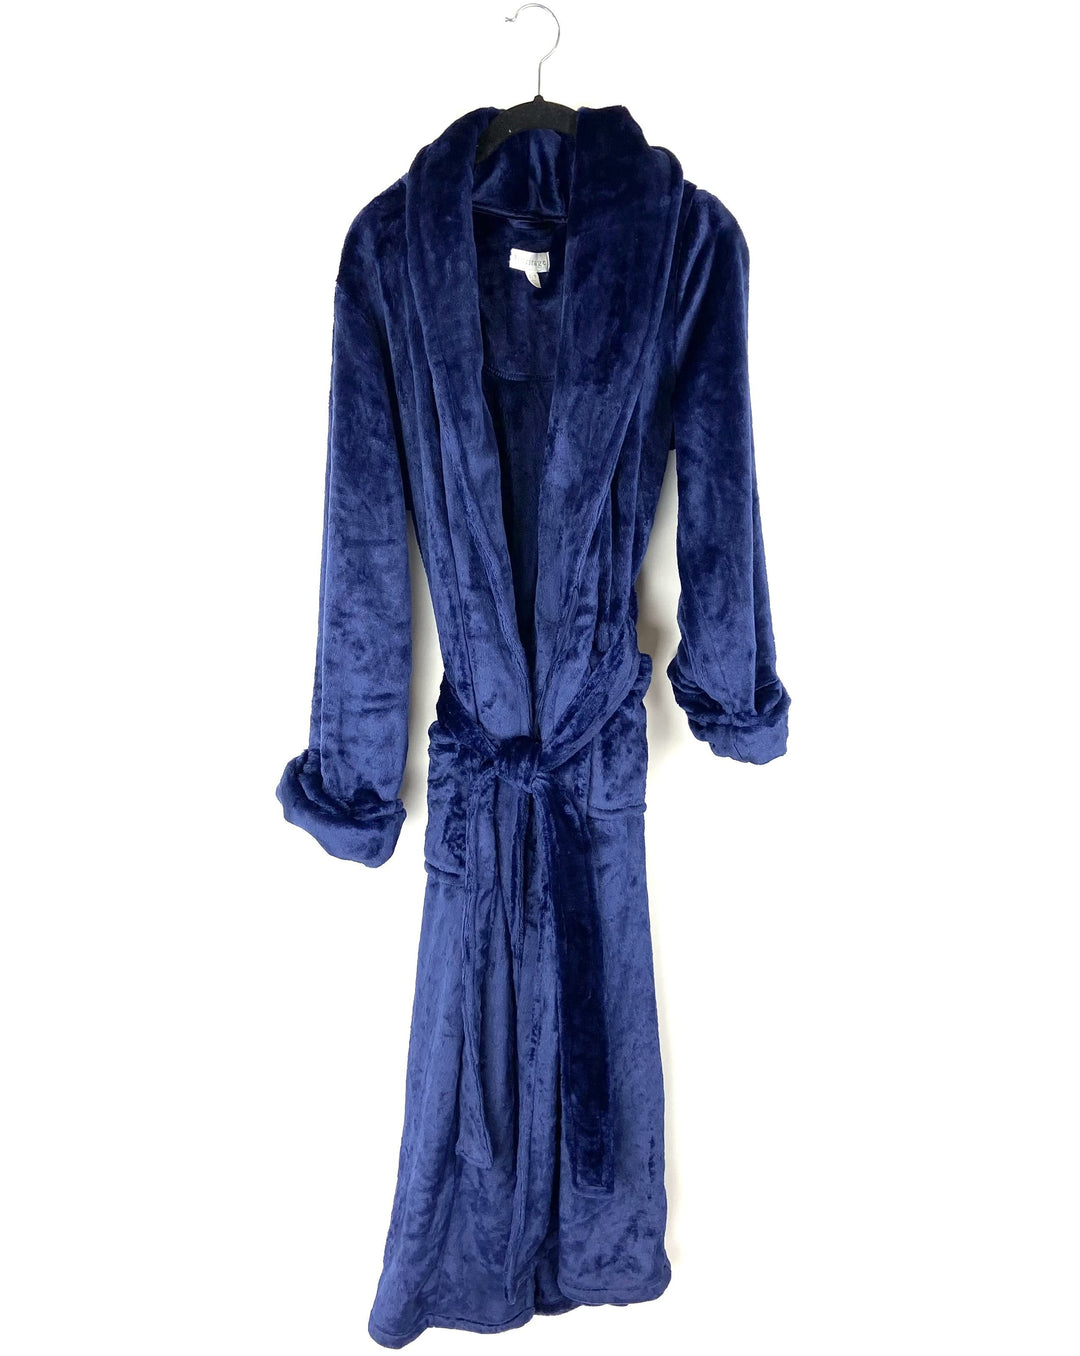 Navy Blue Long Robe - Small